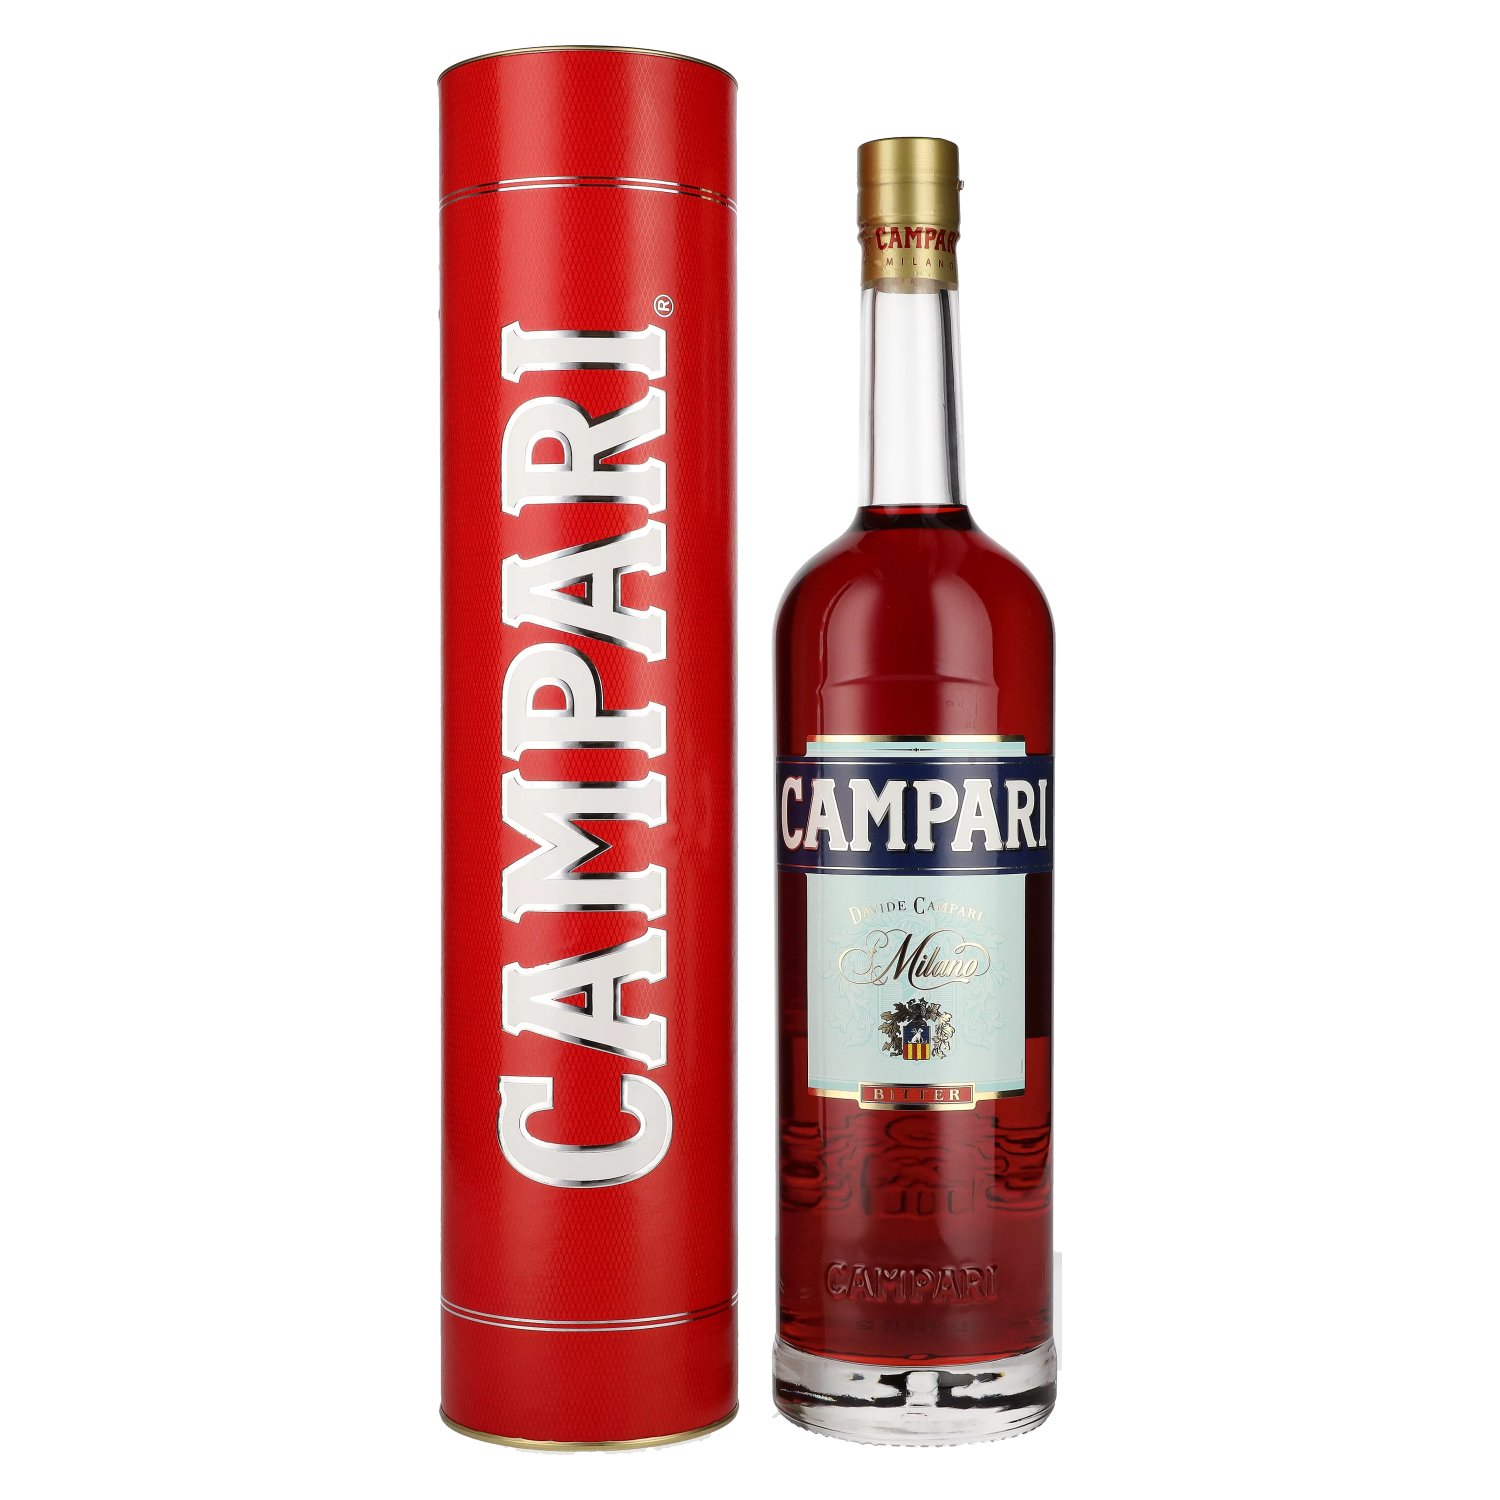 Campari Bitter 25% Vol. 3l in Giftbox with pourer | Likör